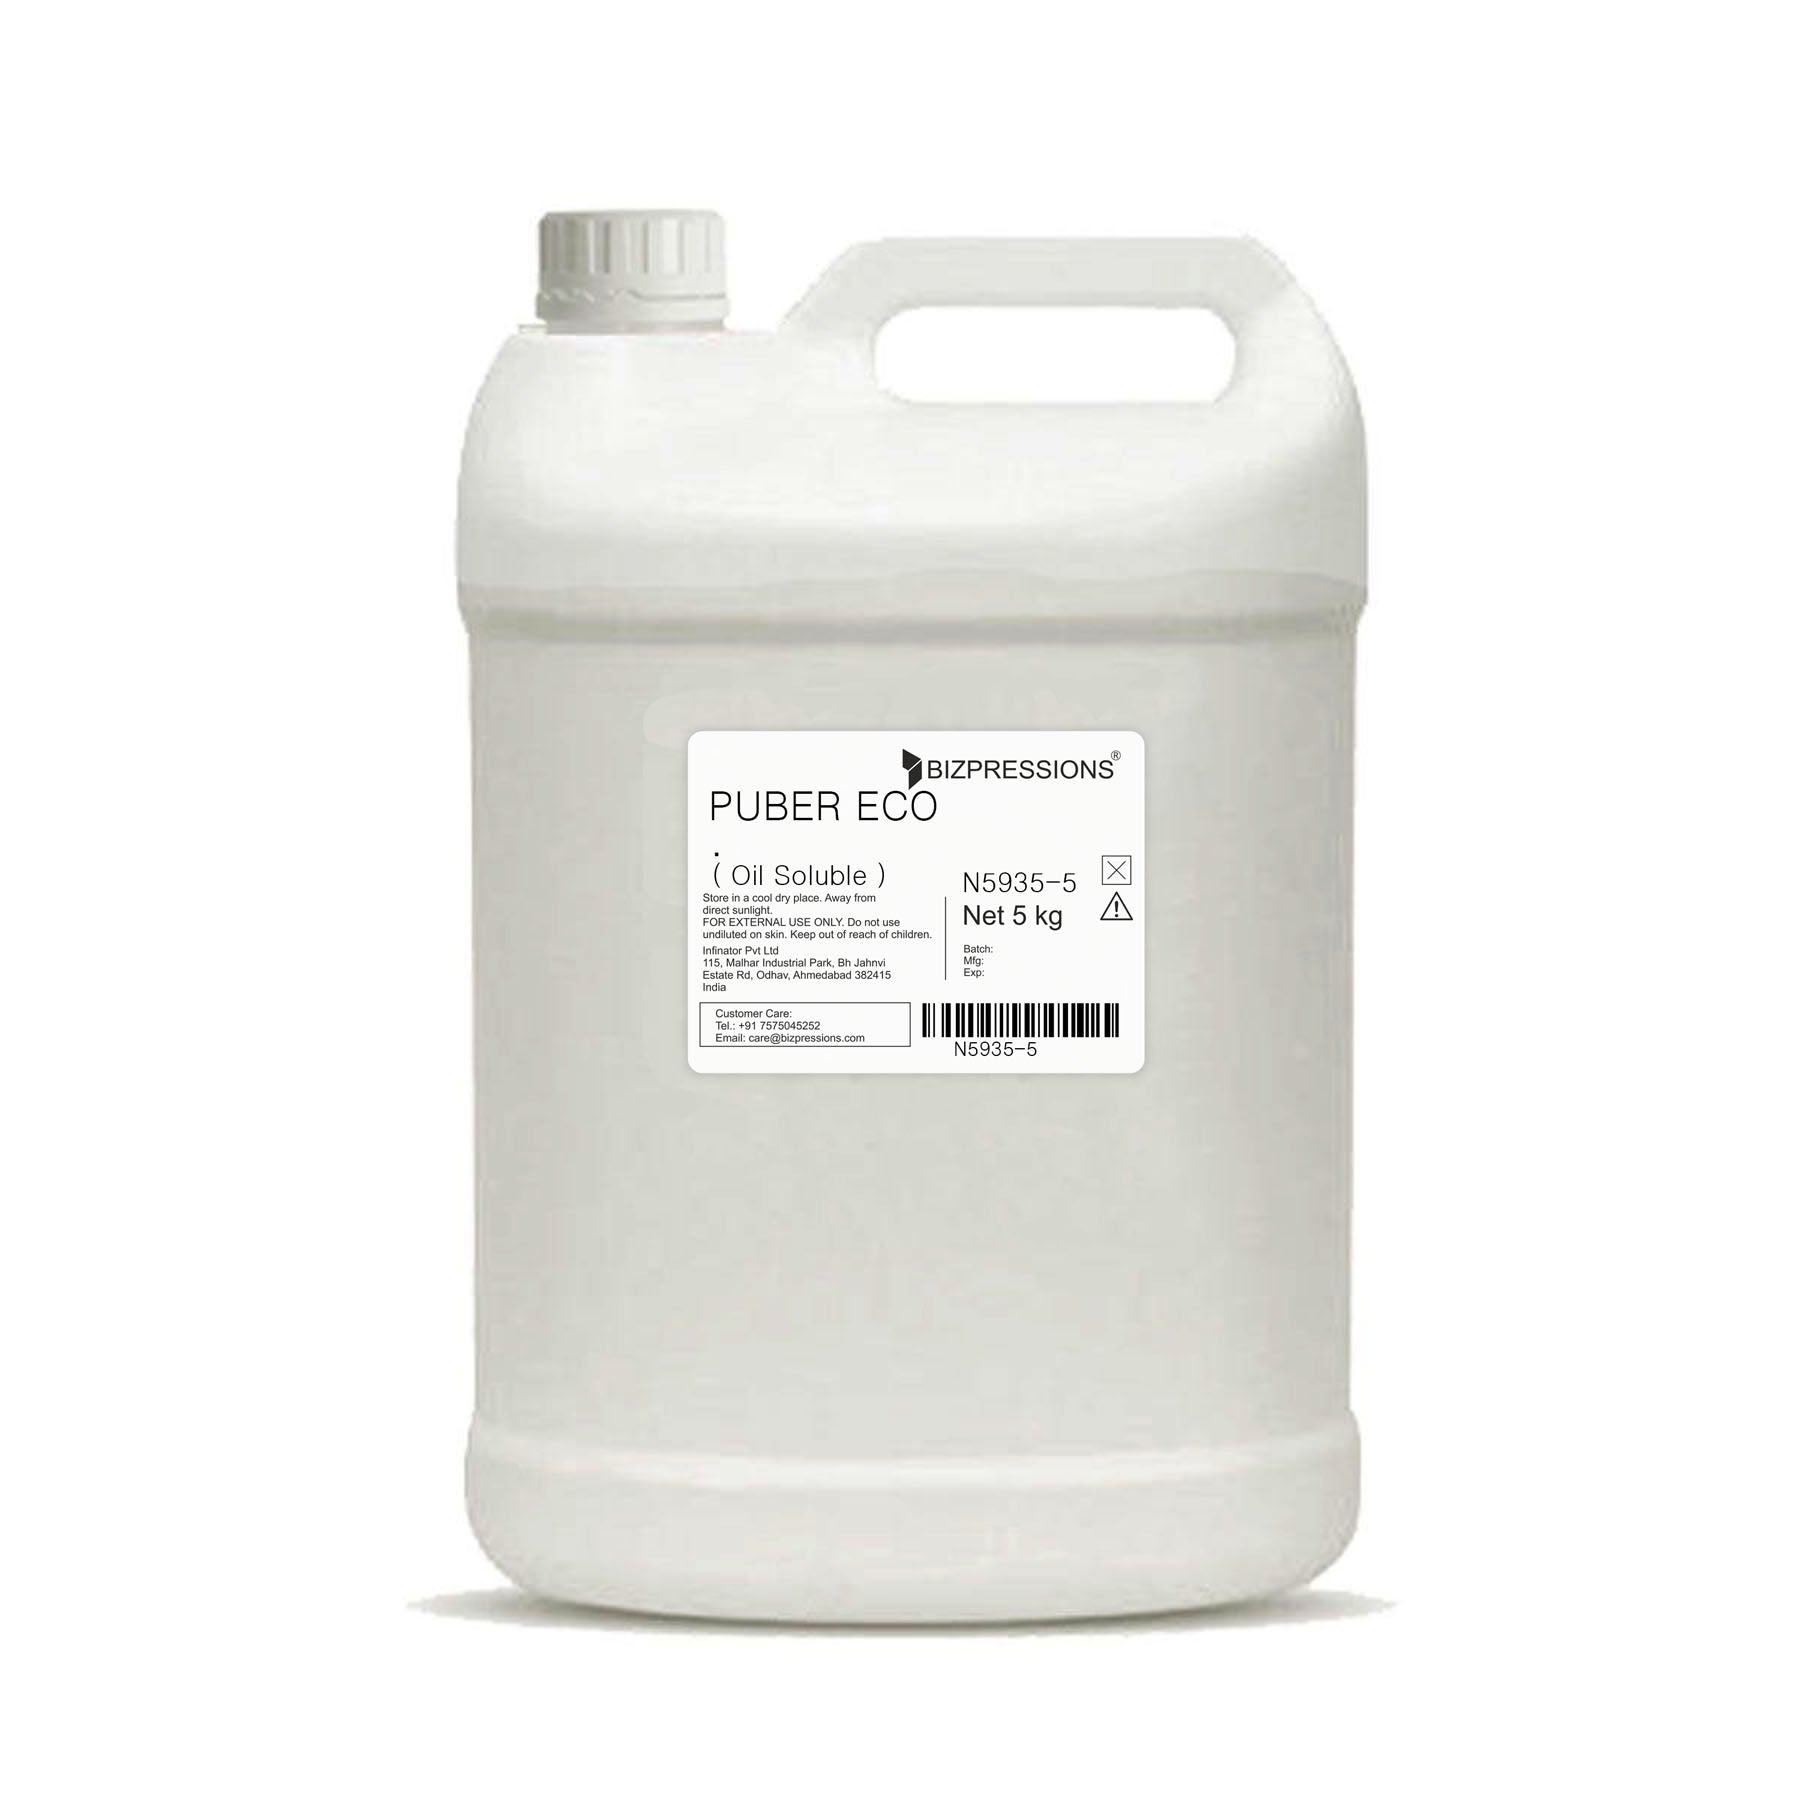 PUBER ECO - Fragrance ( Oil Soluble ) - 5 kg